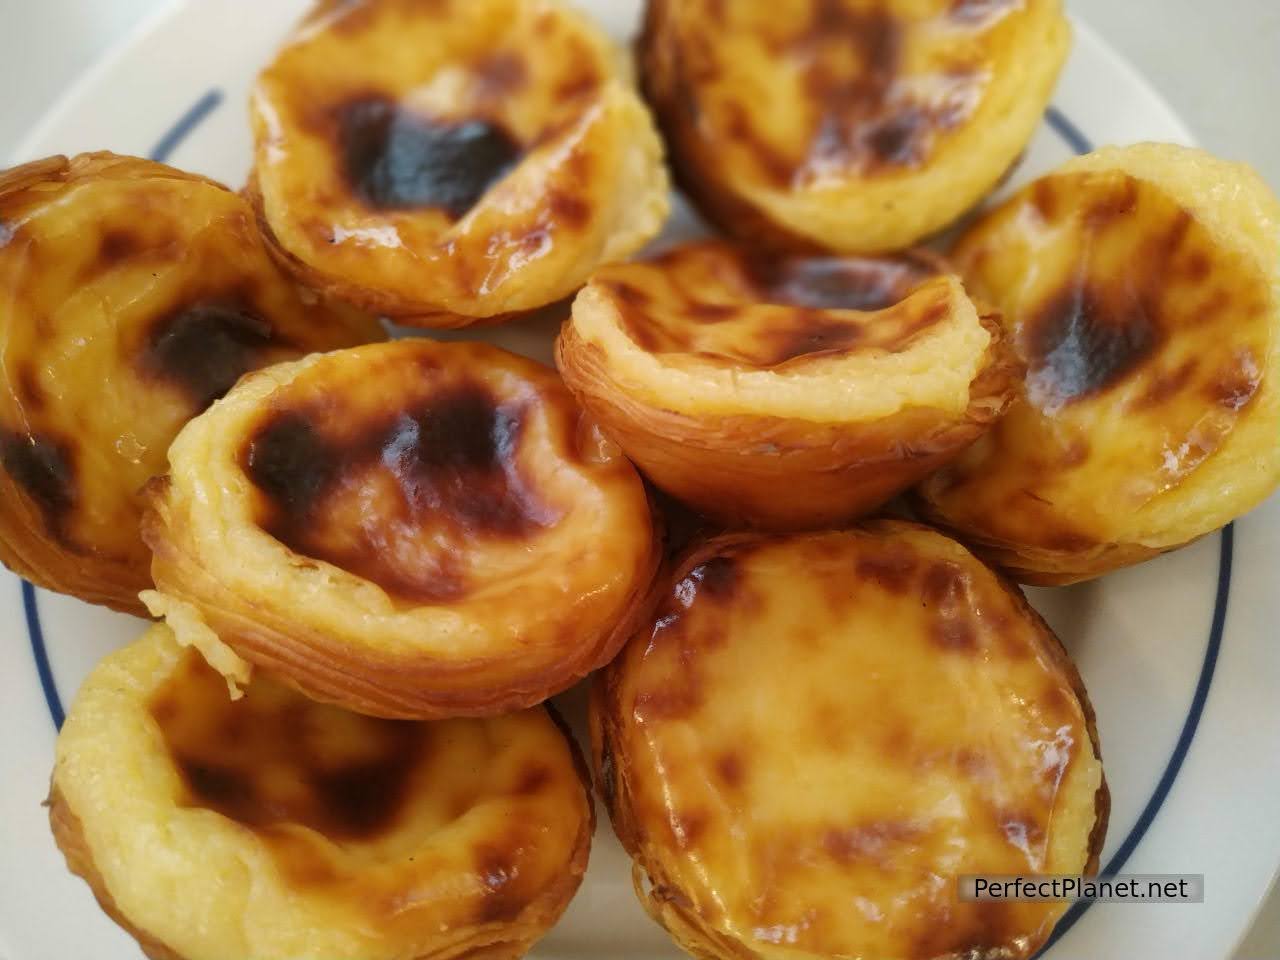 Belém pastries